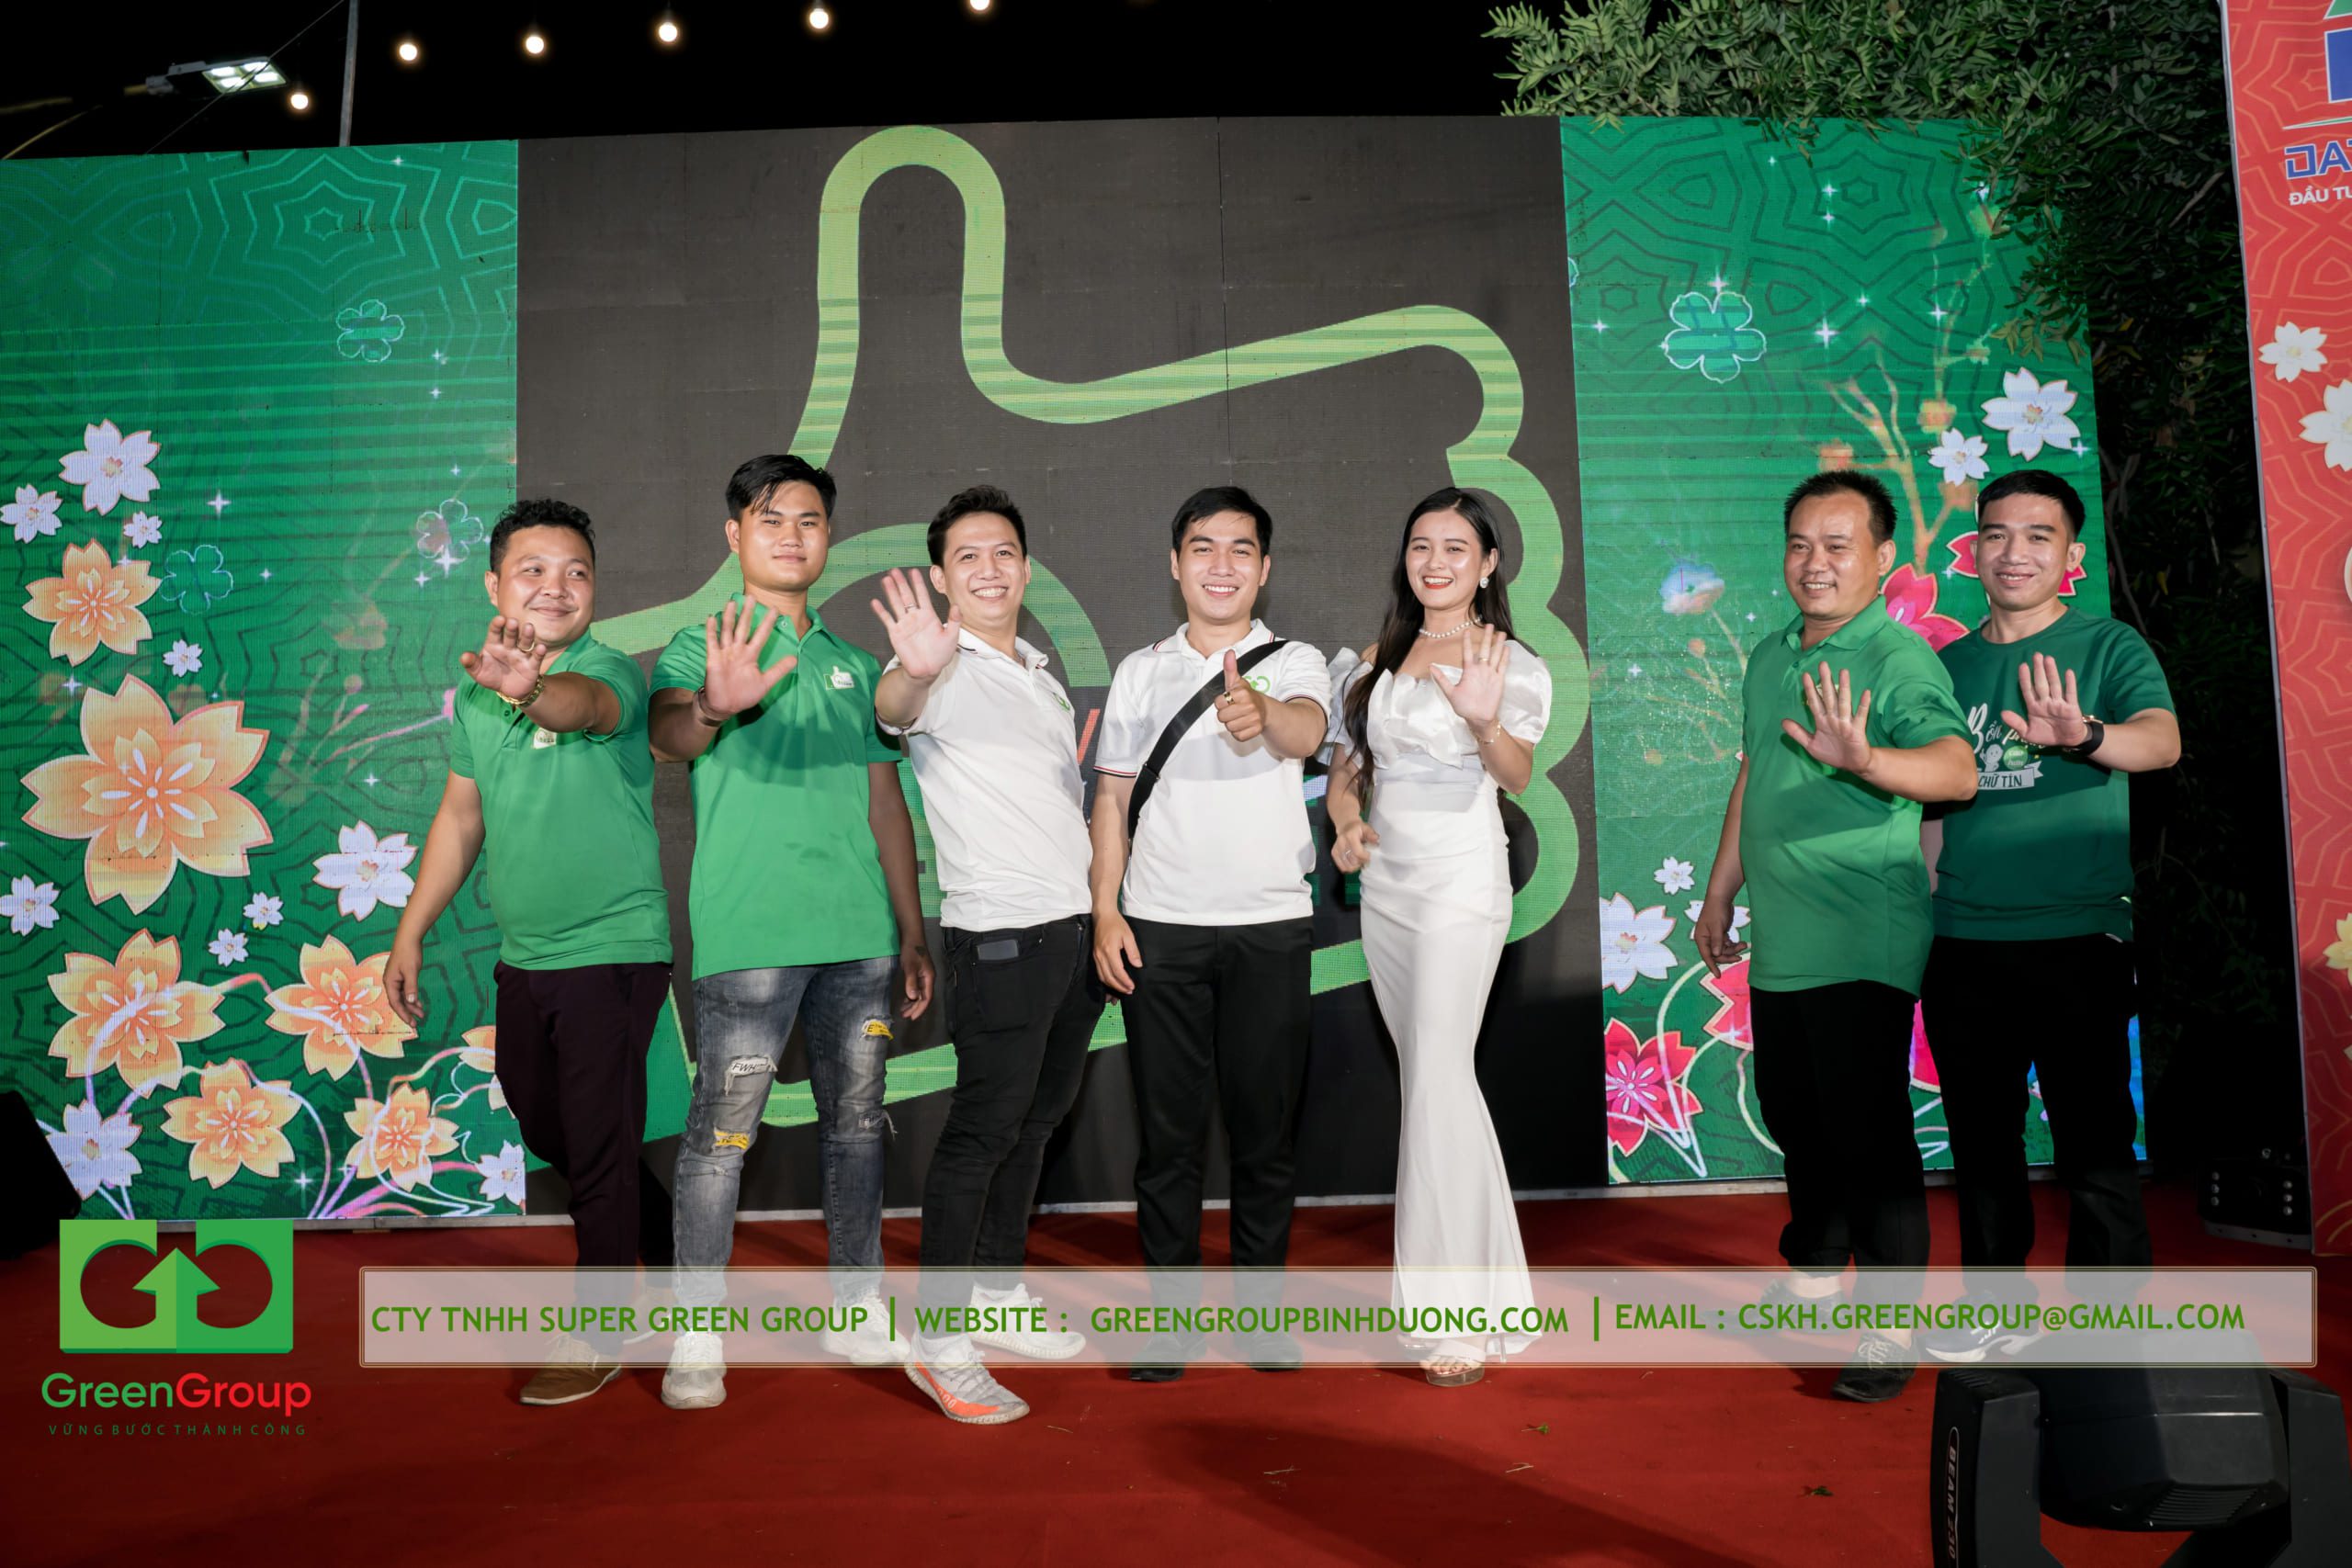 doi ngu green group event 1